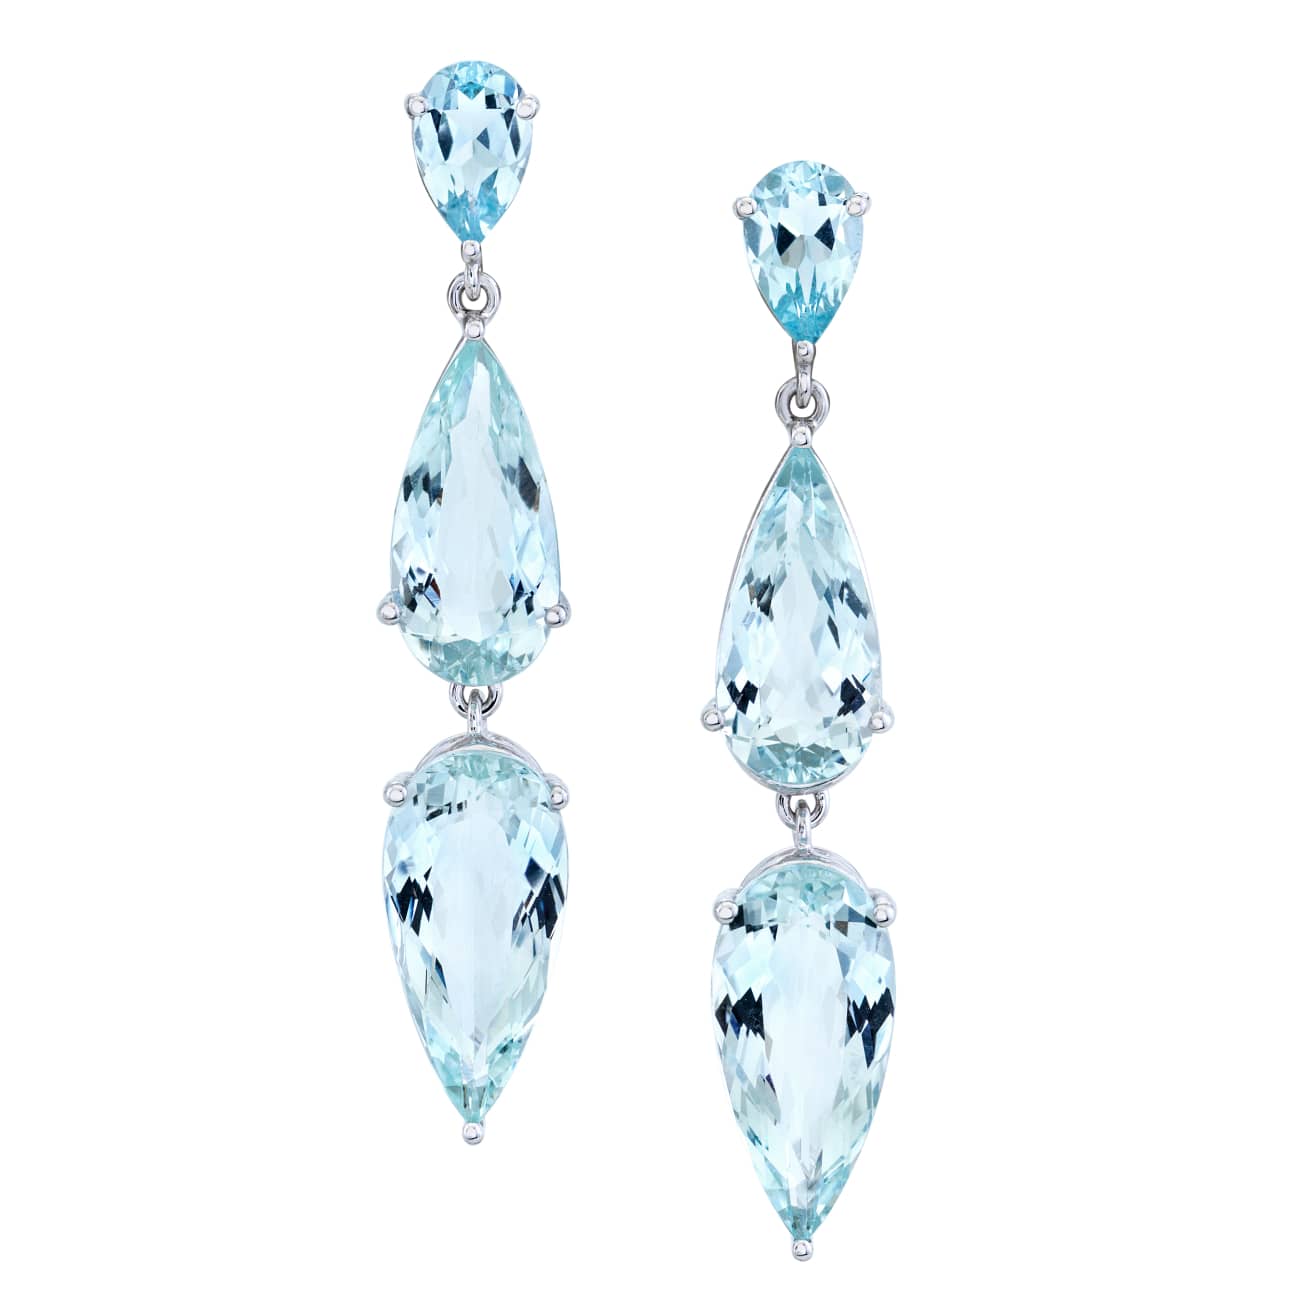 The March Birthstone: Jewellery Celebrating The Beauty of Aquamarine